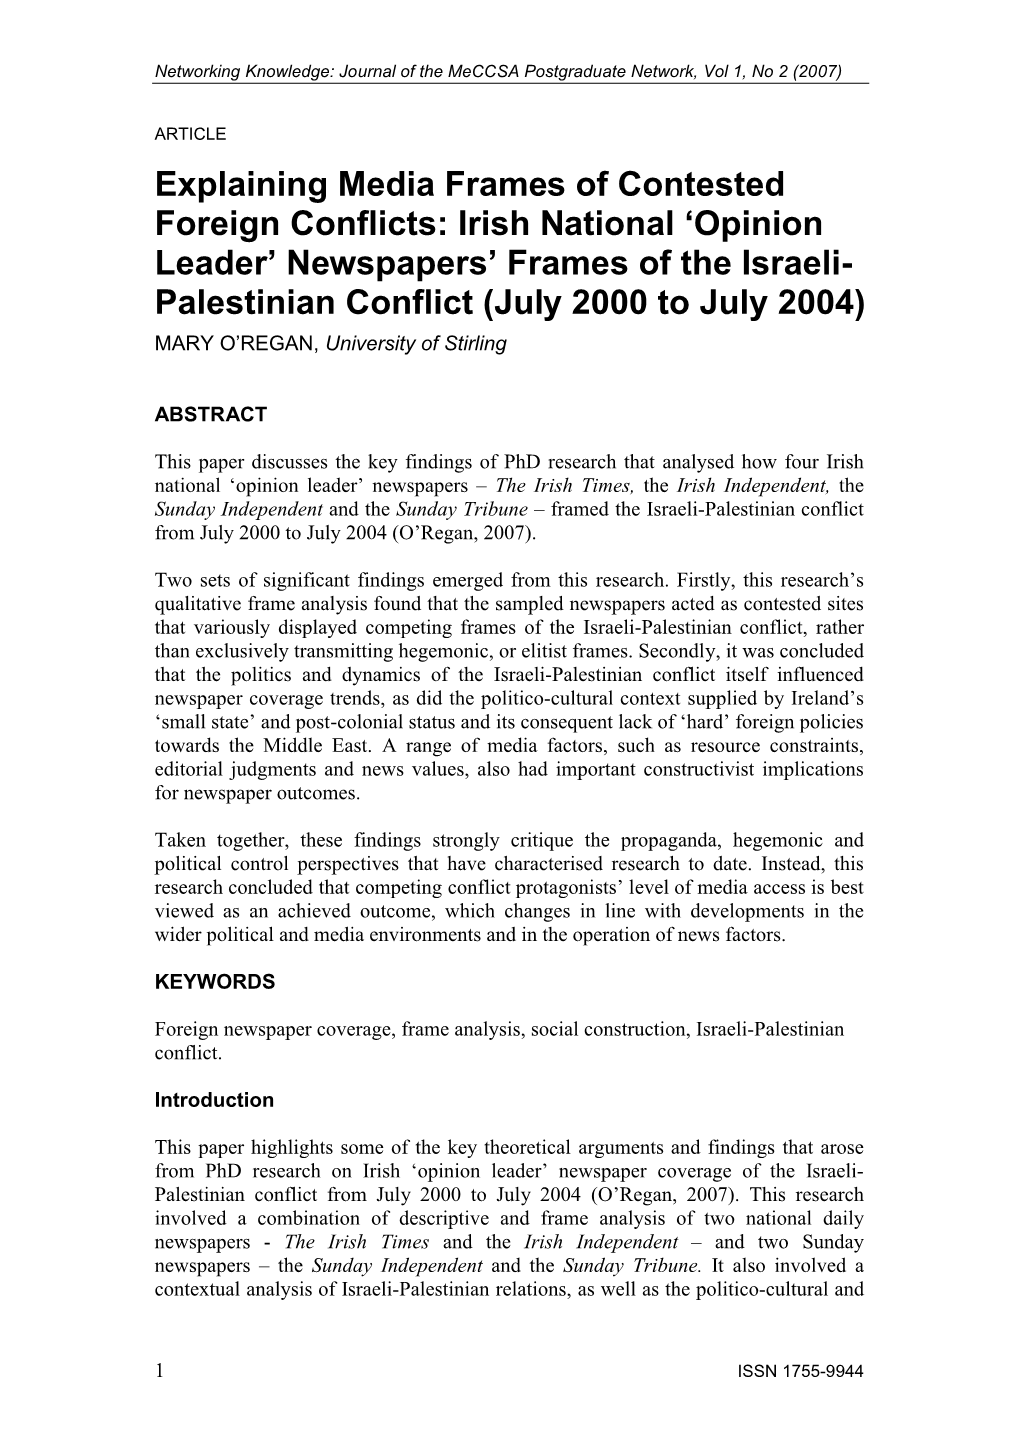 Newspapers' Frames of the Israeli